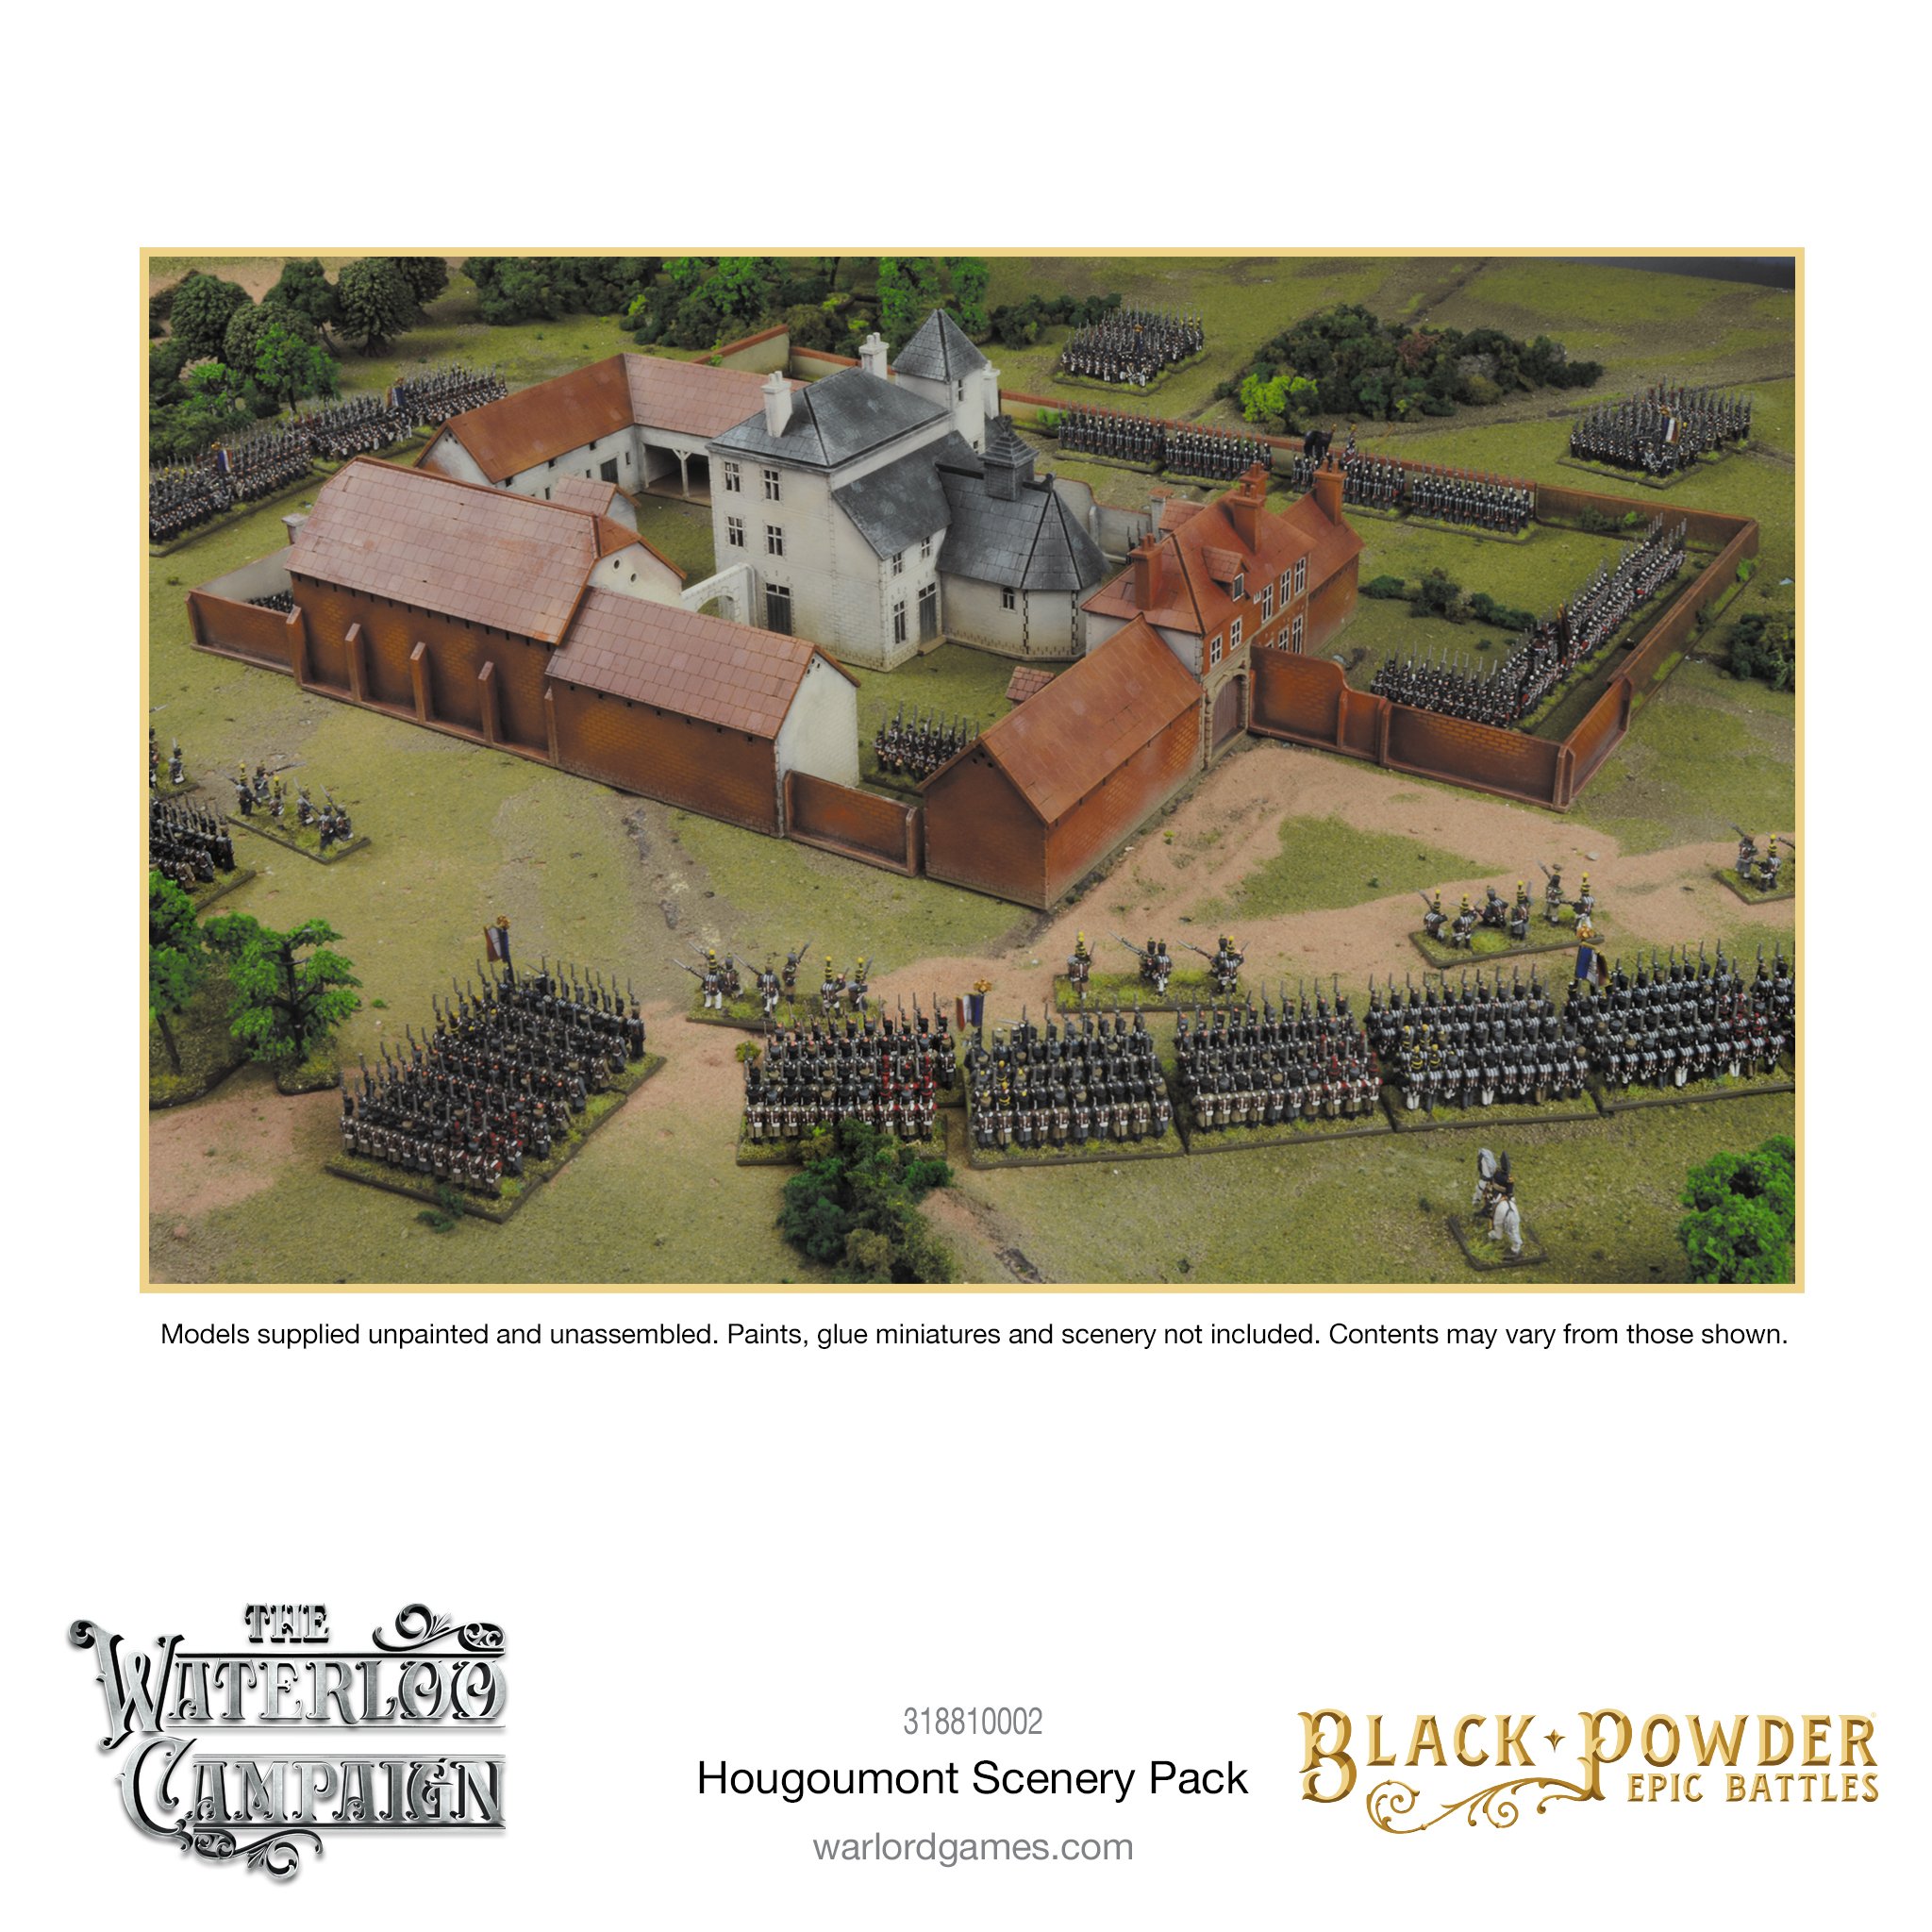 Hougoumont Scenery Pack - Black Powder Epic Battles